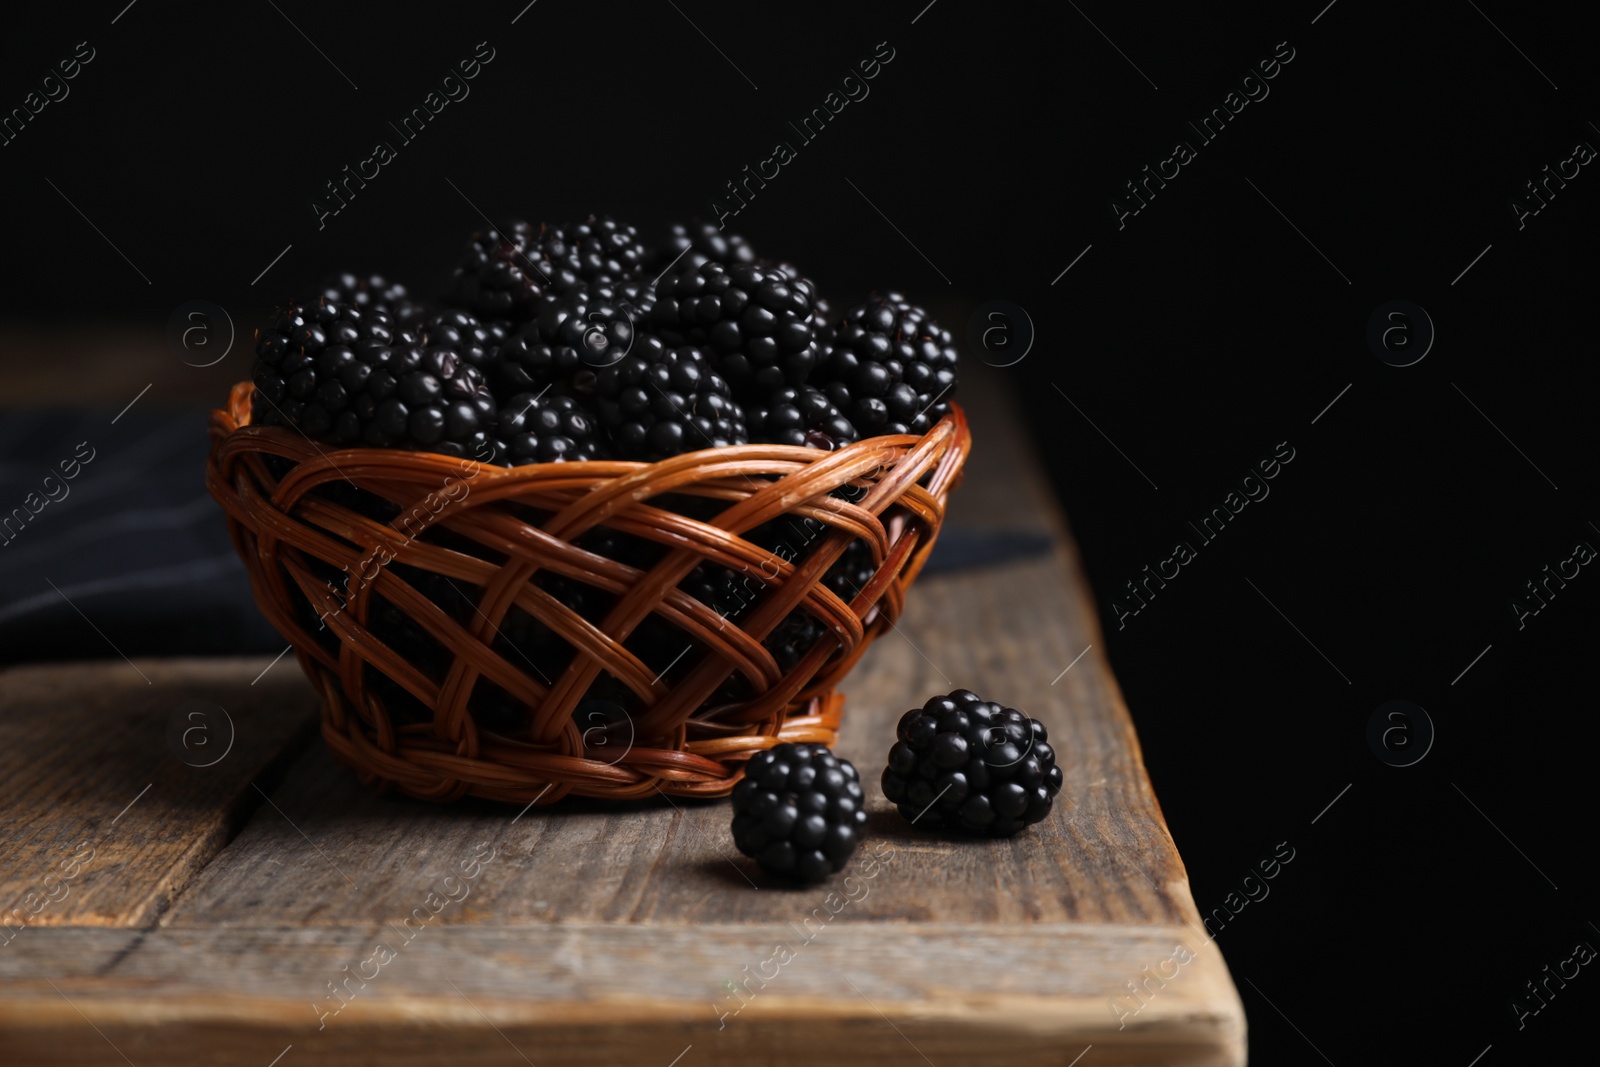 Photo of Fresh ripe blackberries in wicker bowl on wooden table against dark background